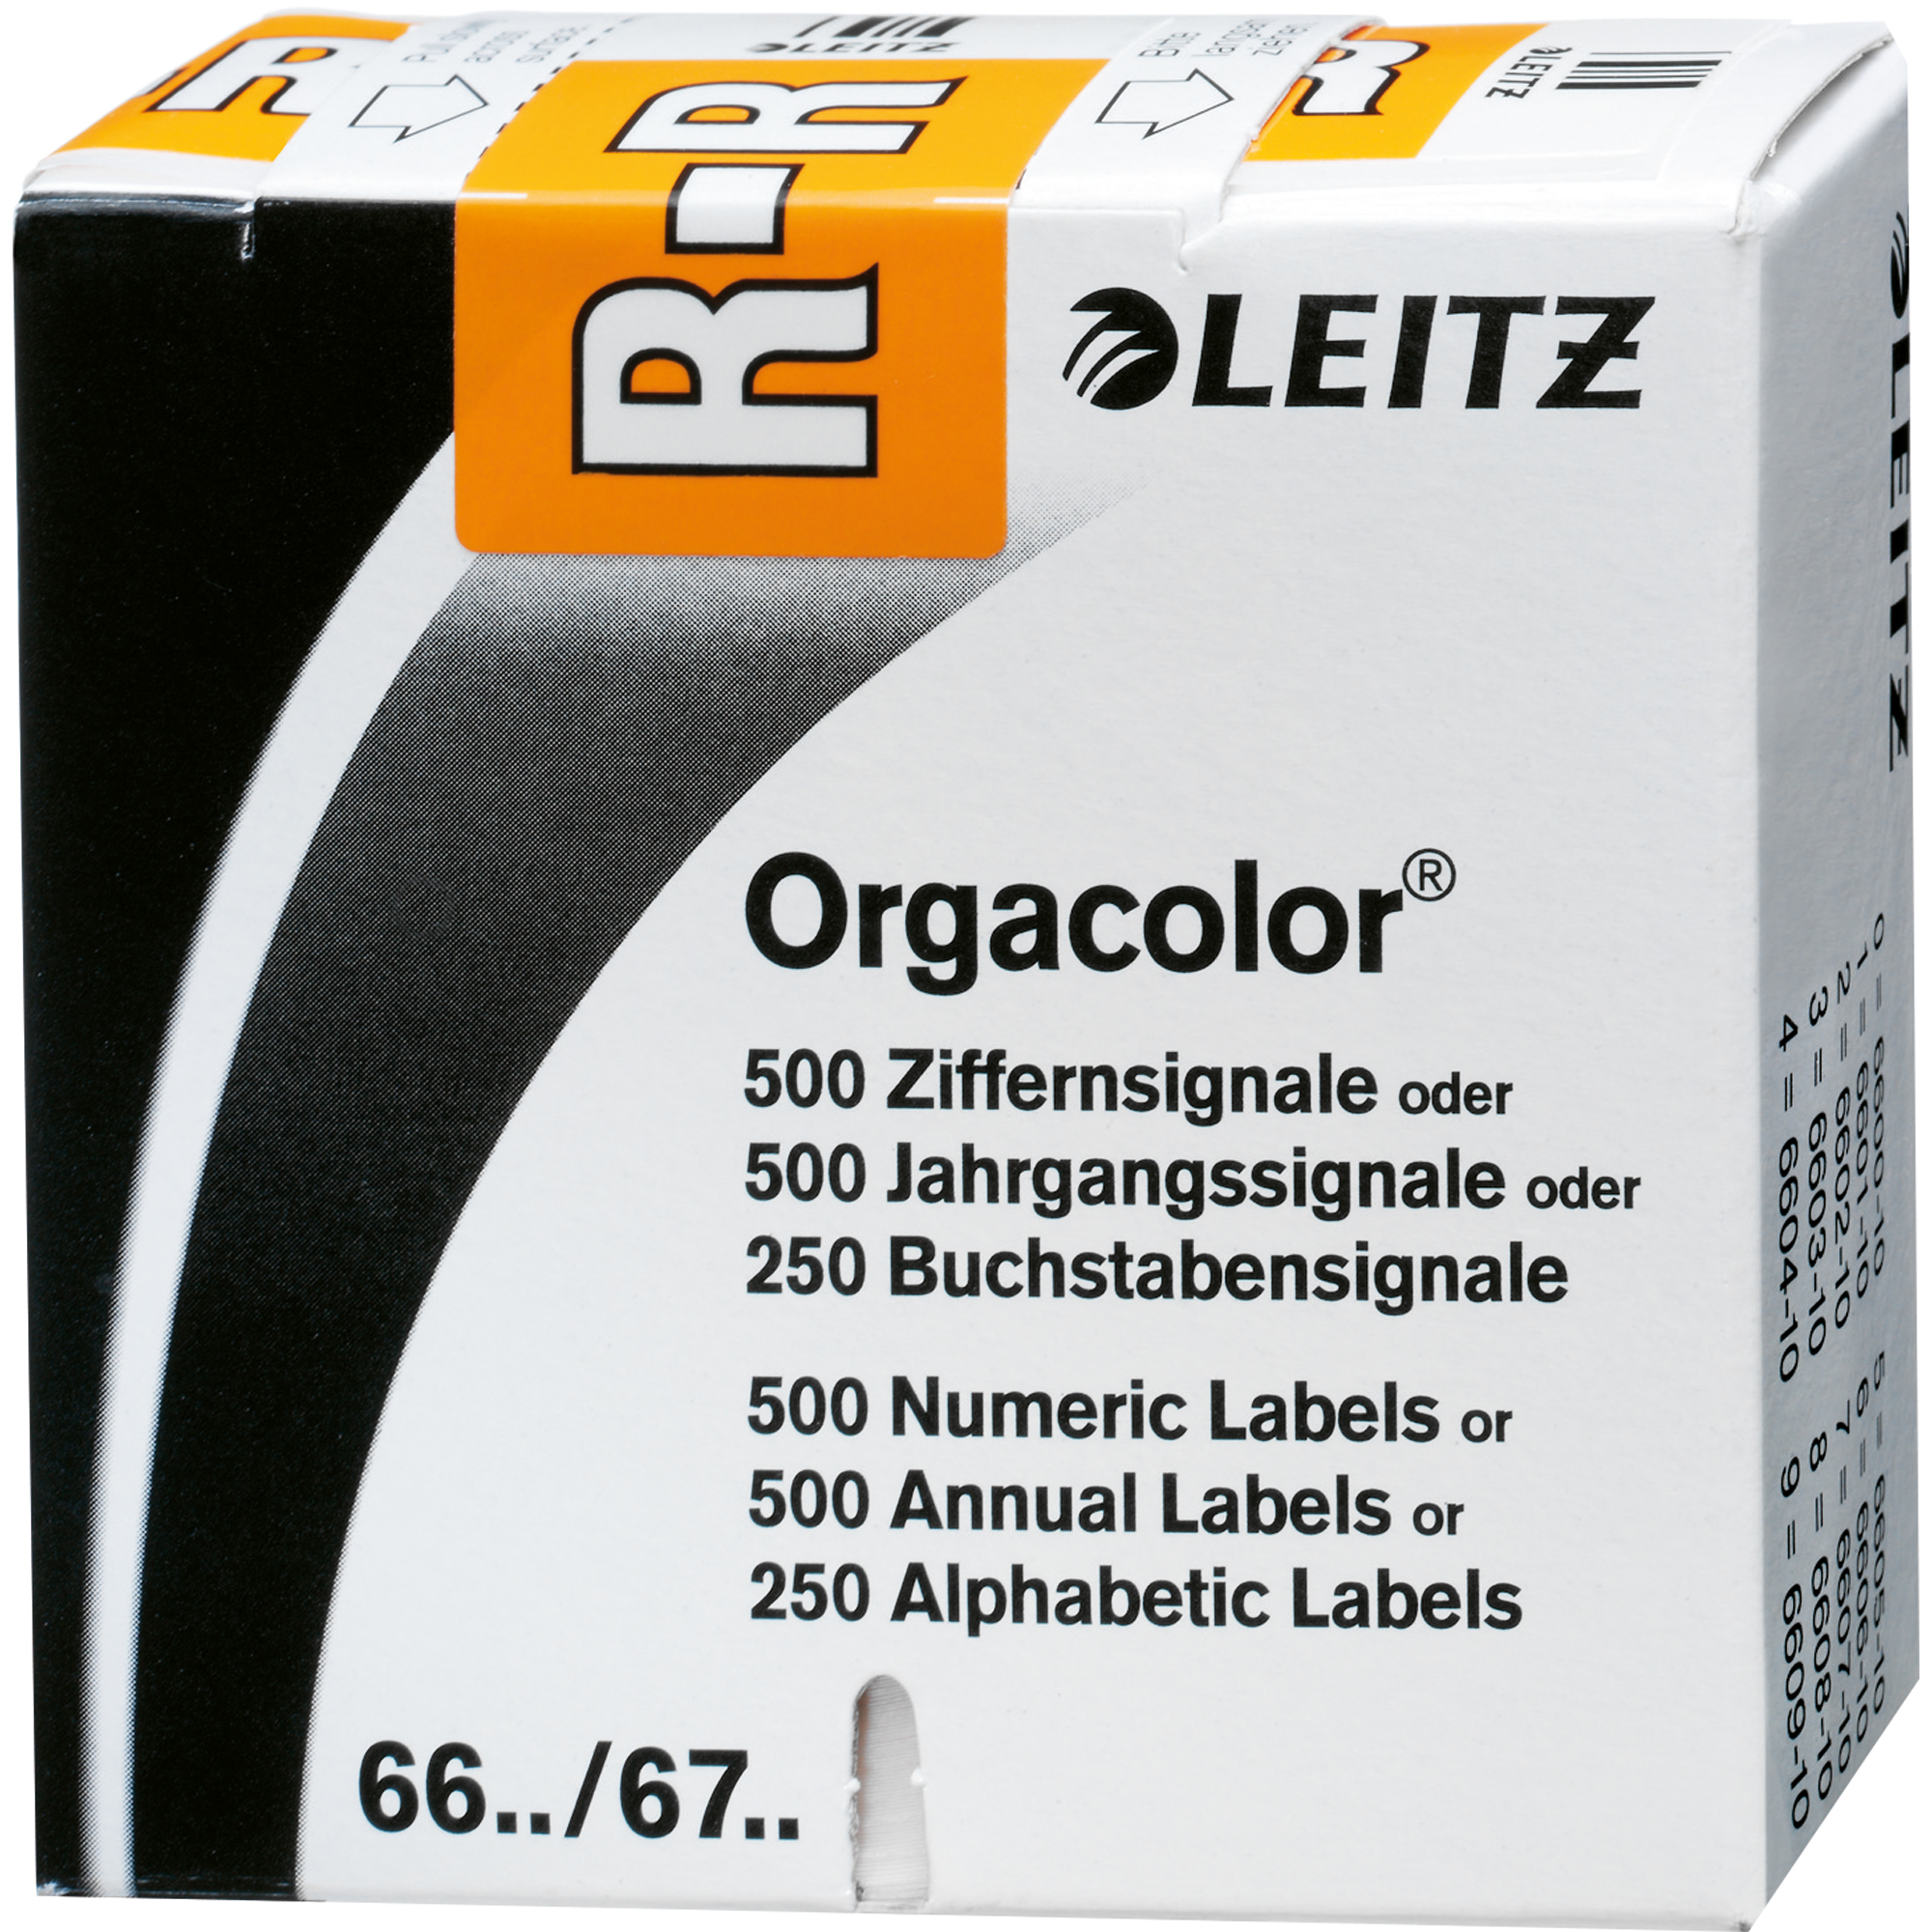 Leitz Buchstabensignal Orgacolor® orange R